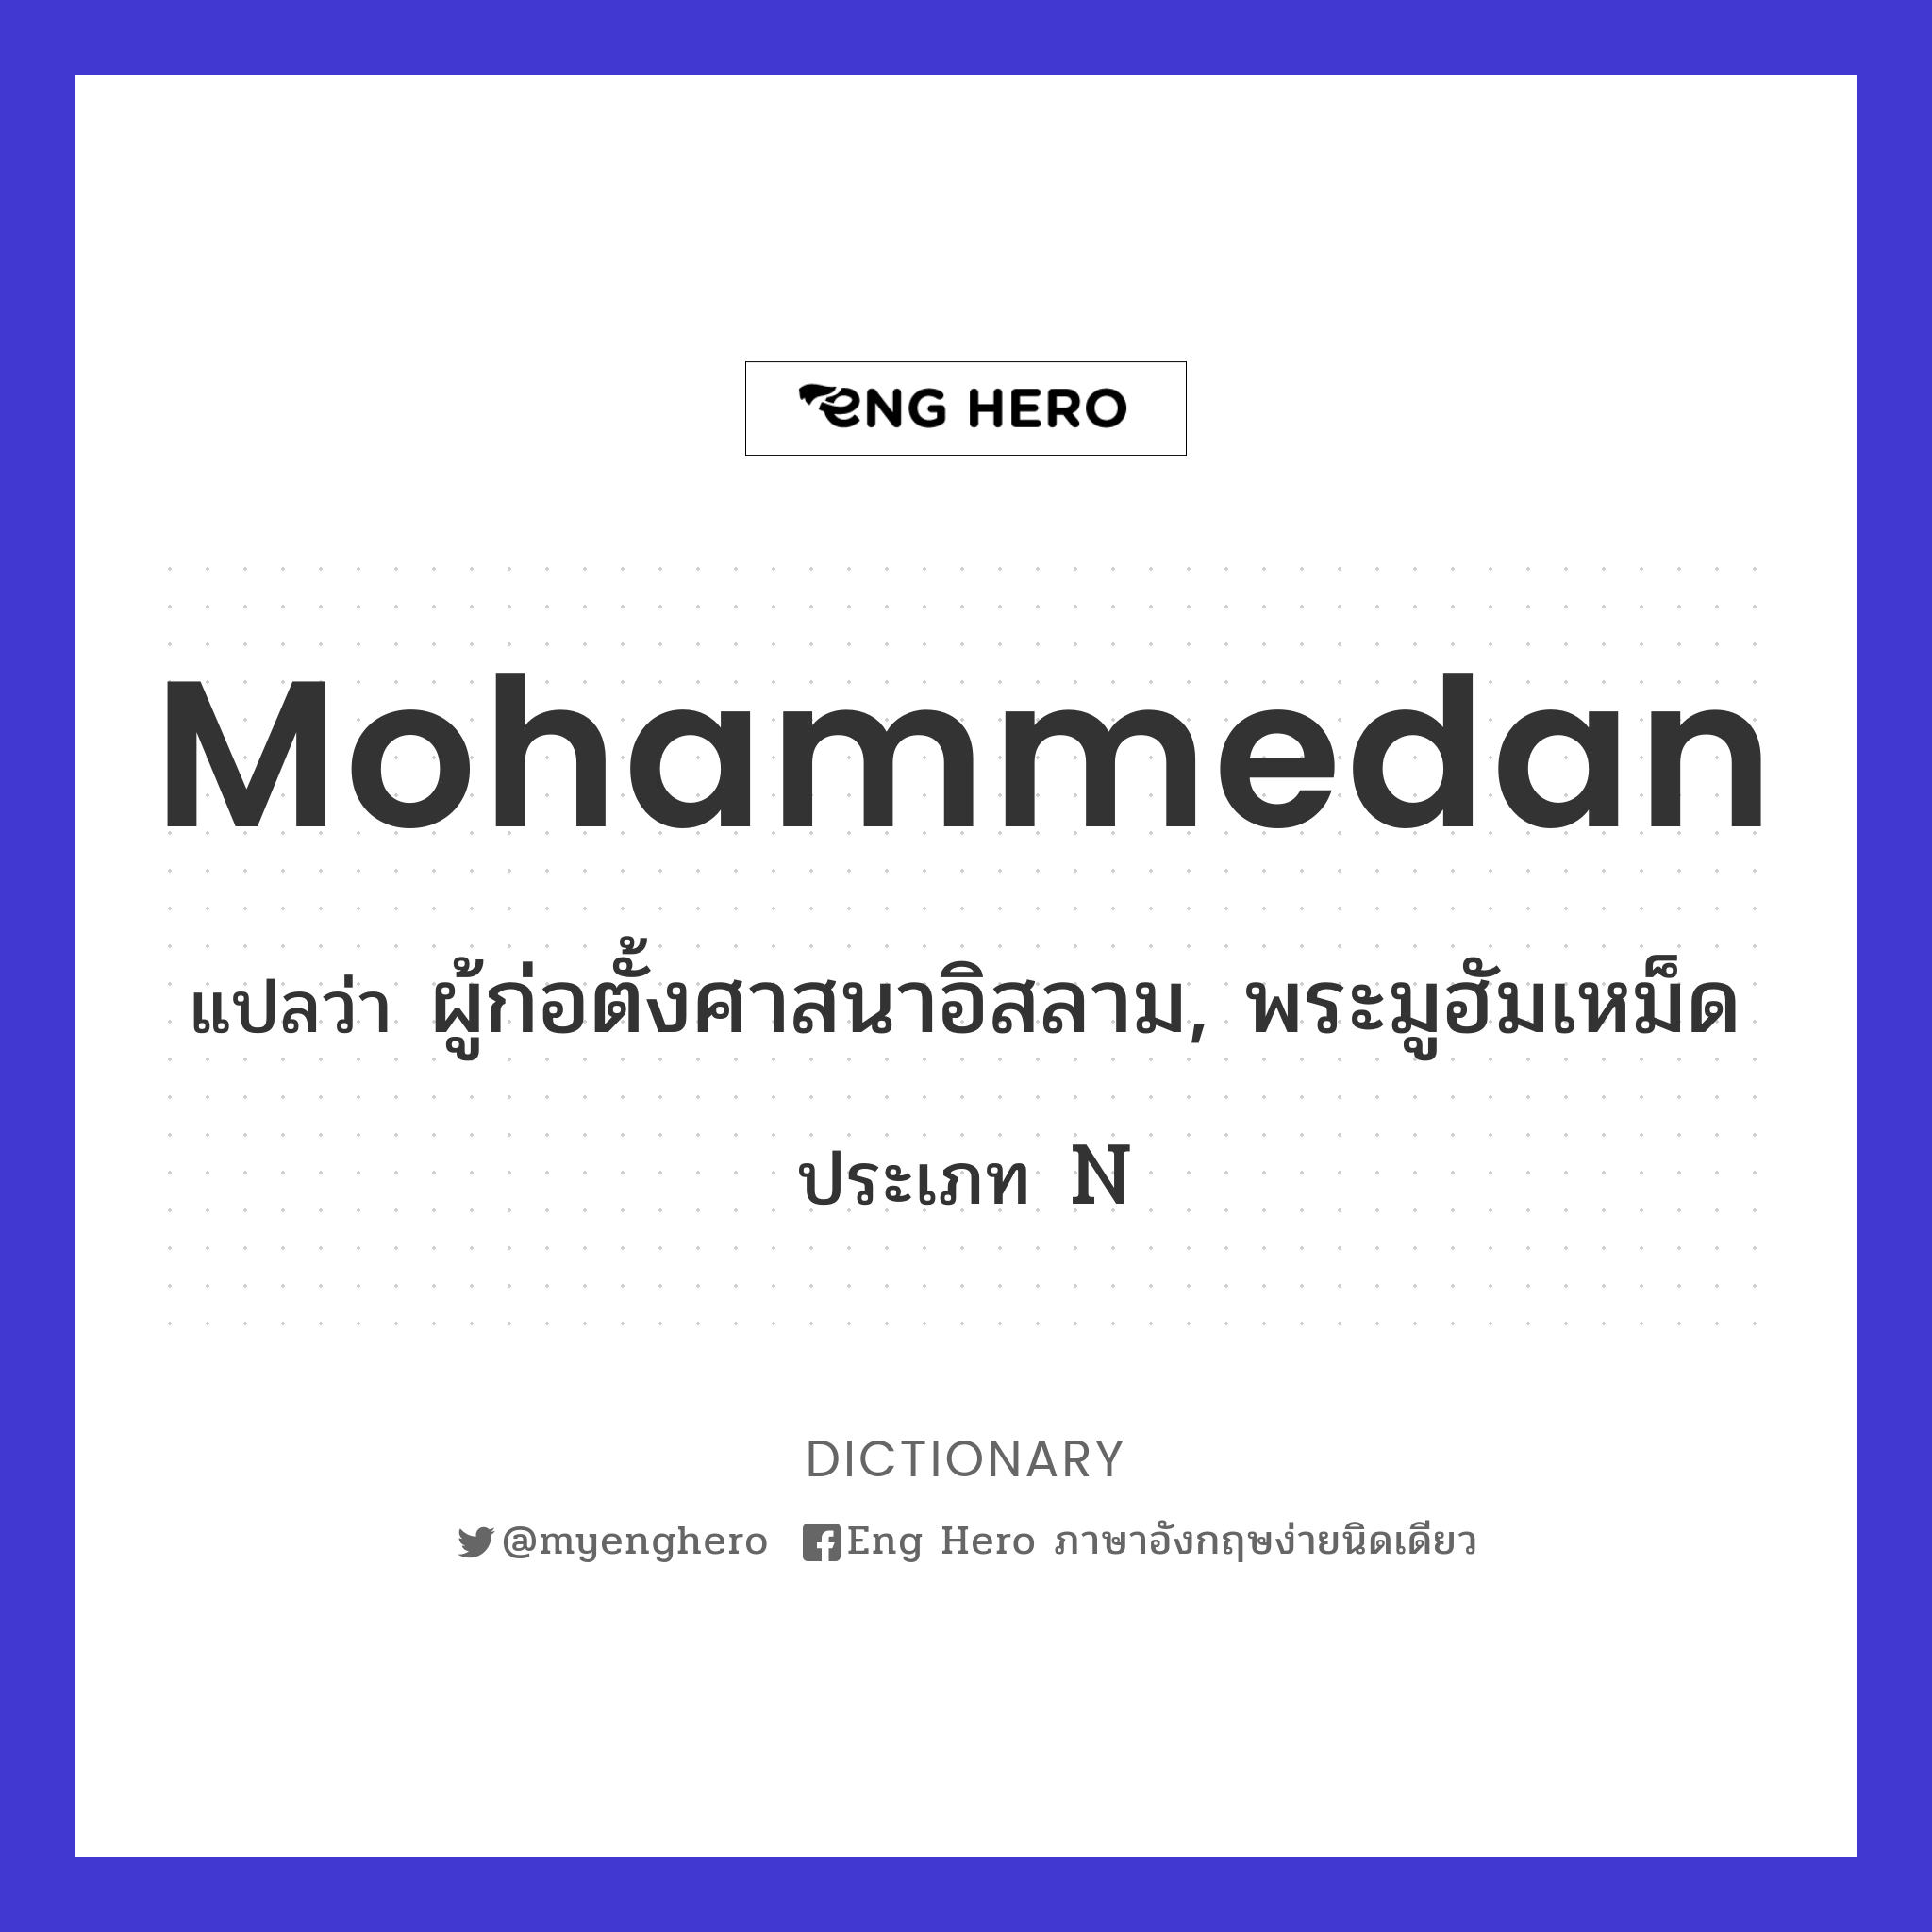 Mohammedan